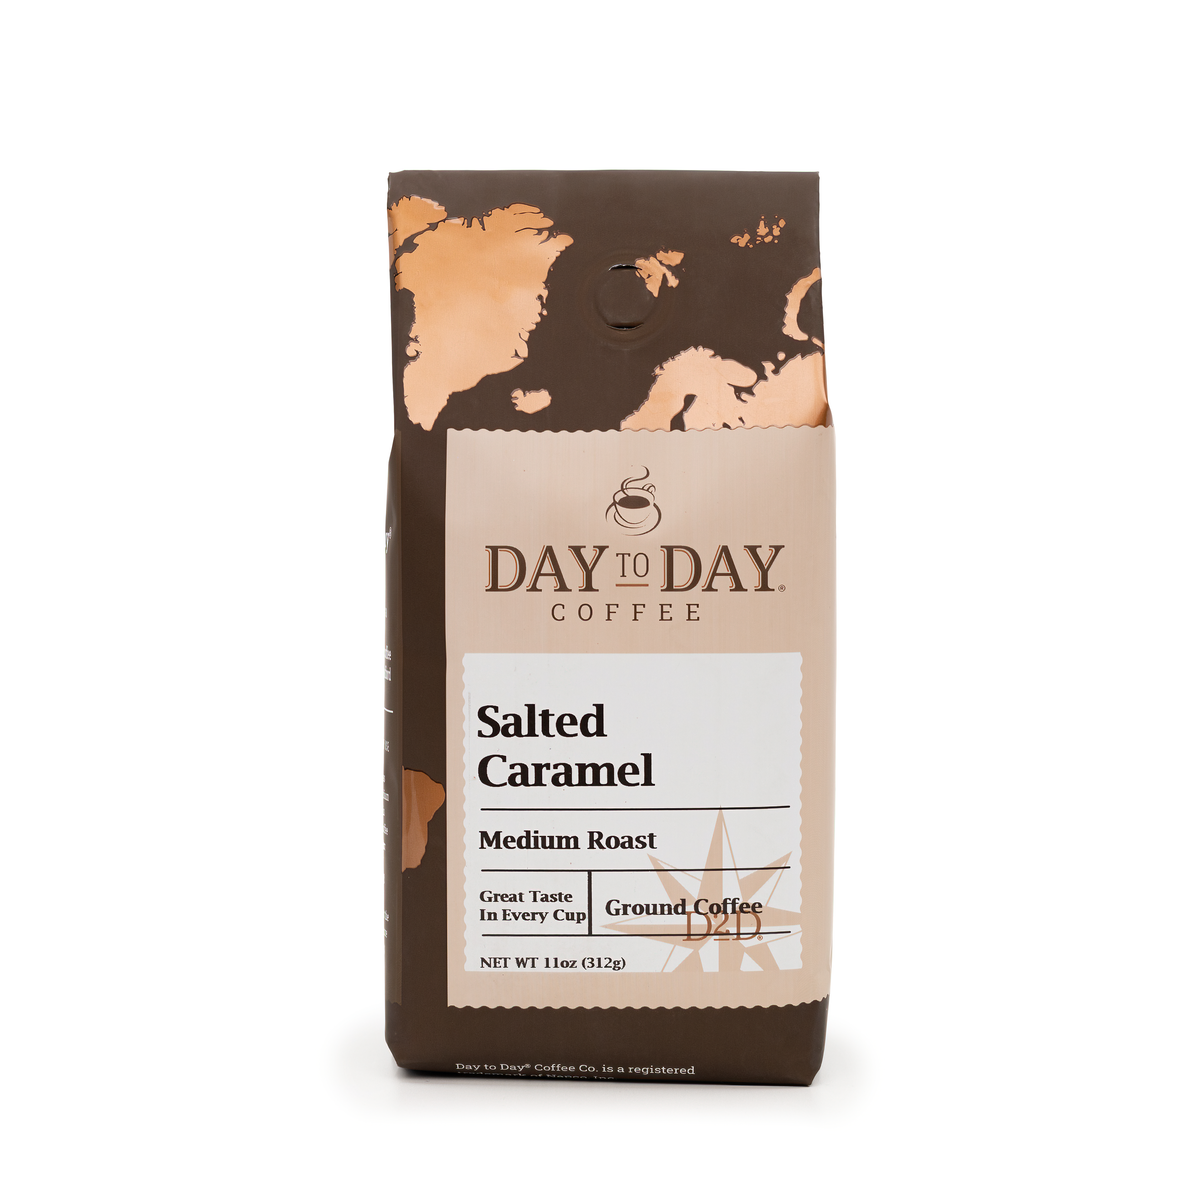 Day to day 11oz salted caramel medium roast ground coffee - 1